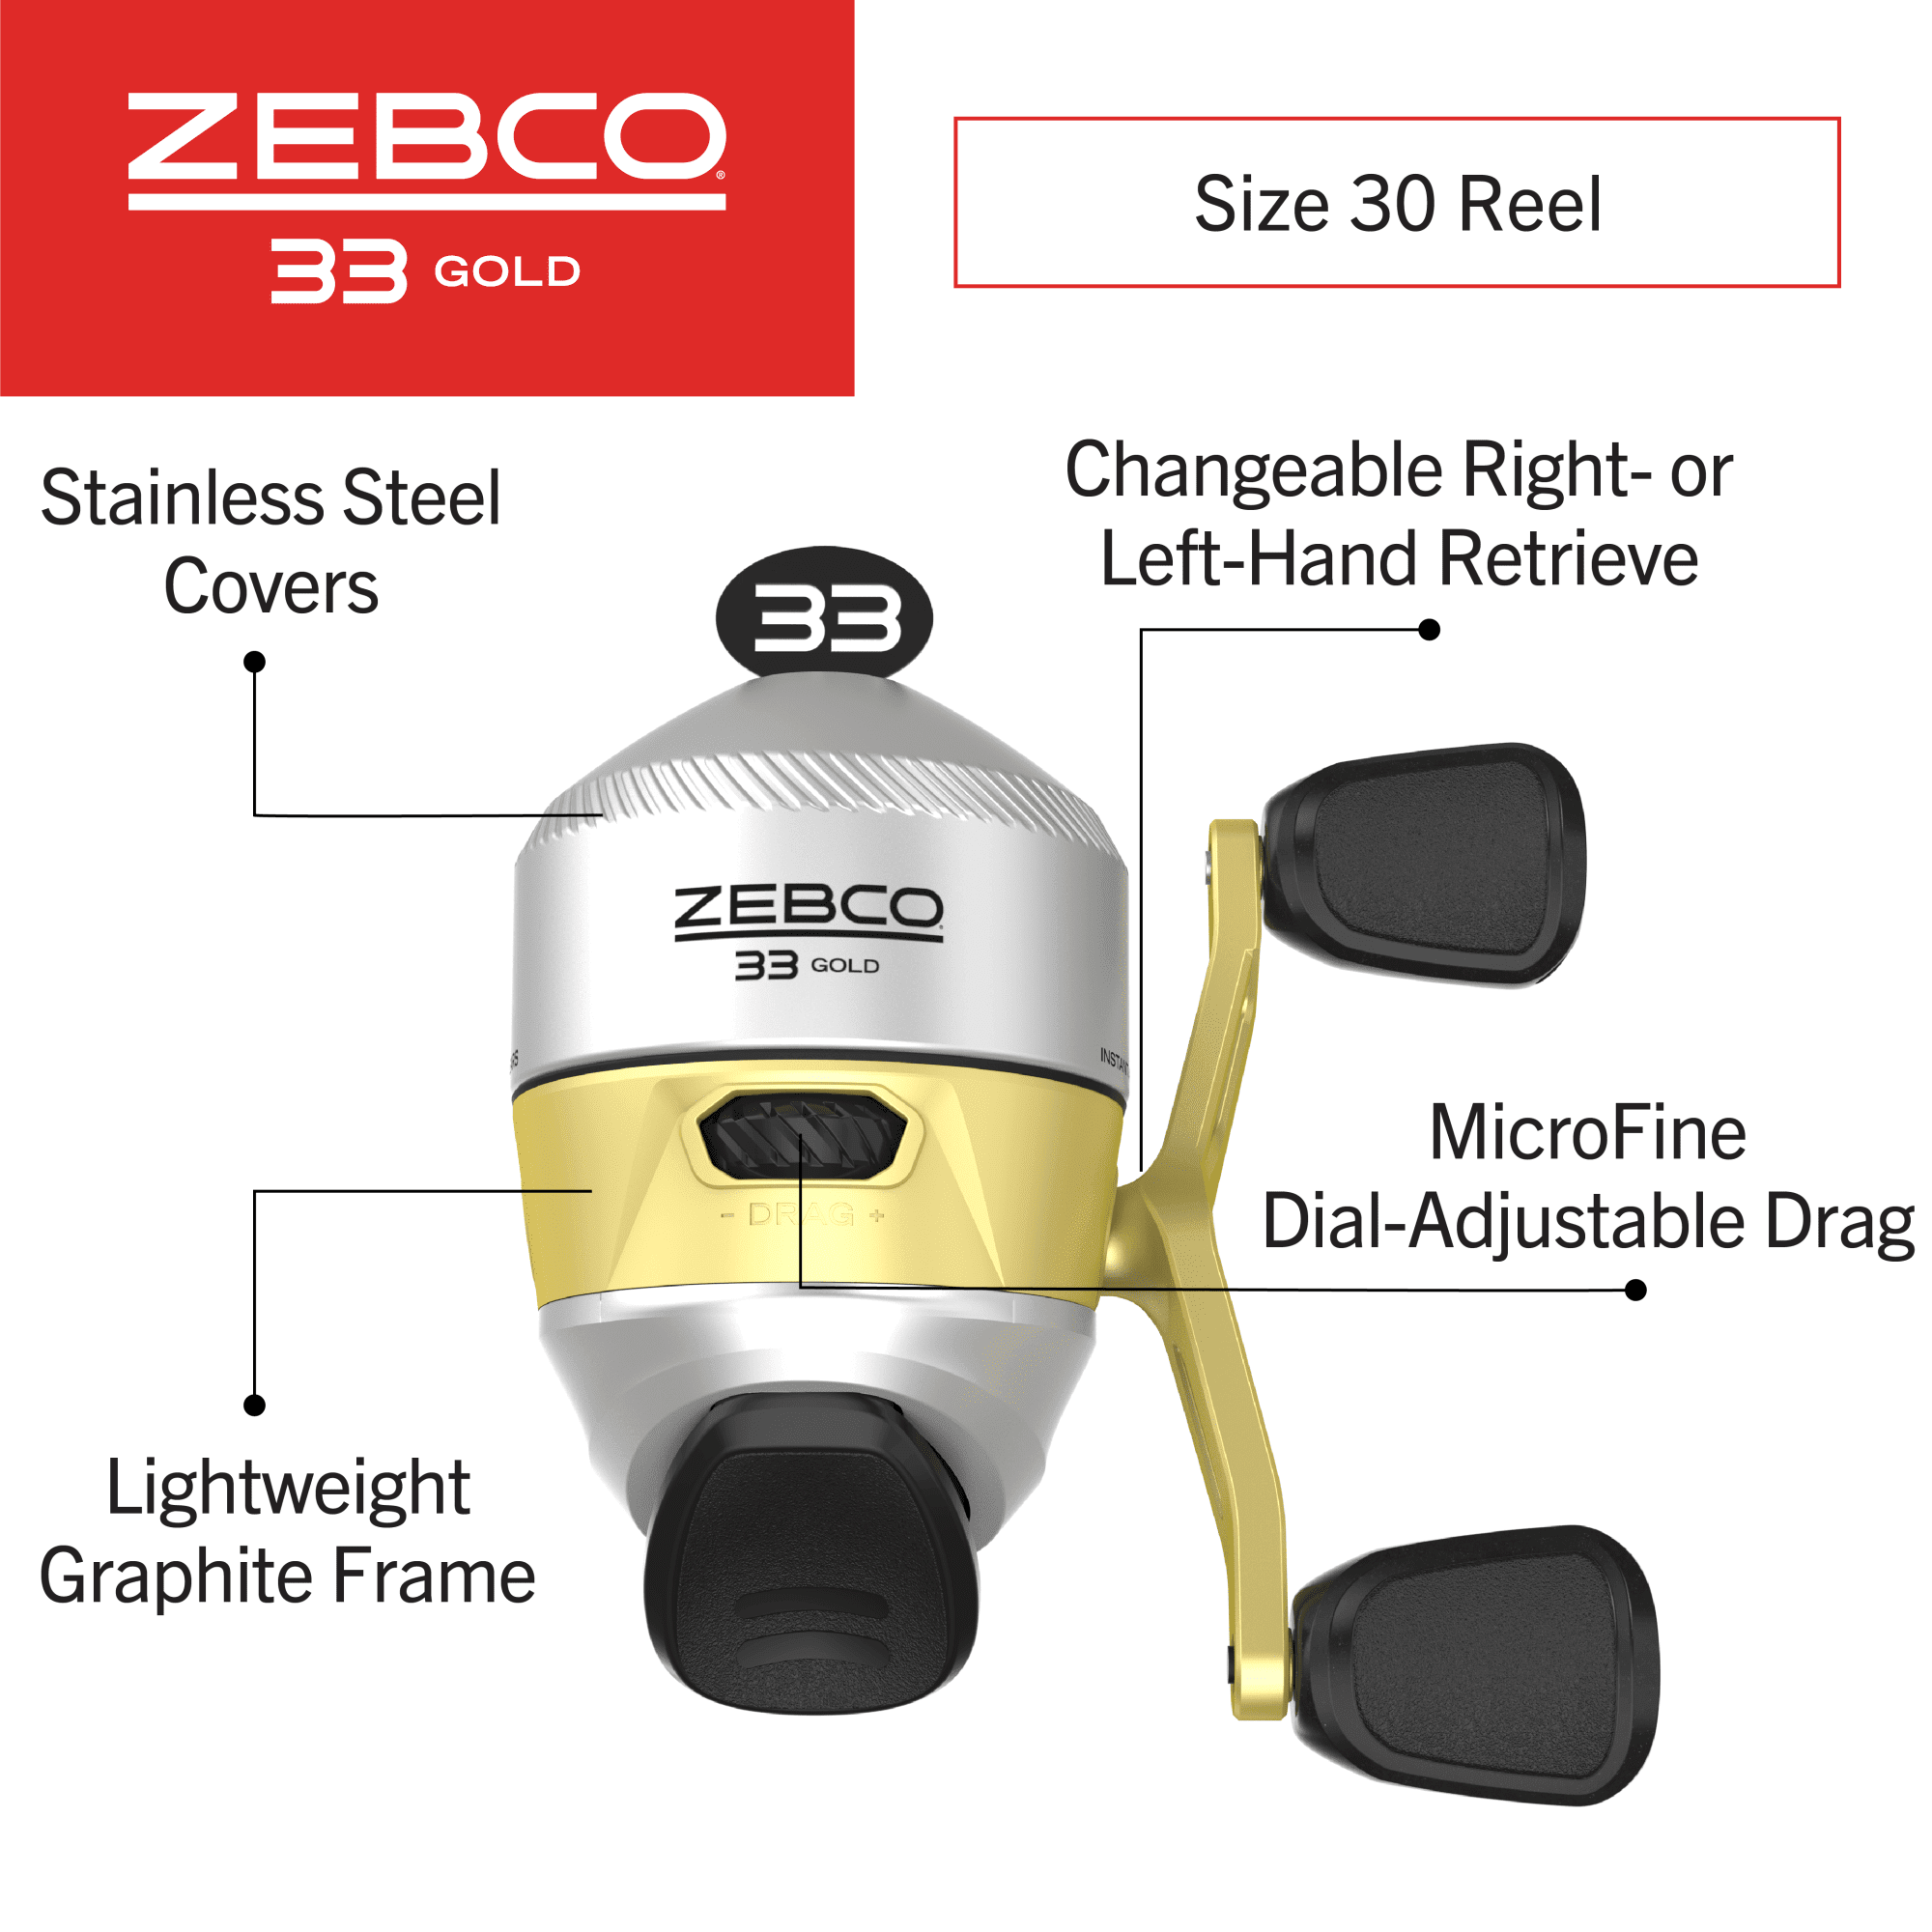 Zebco 33 Gold SpinCast Reel 33NGOLD Pre-Spooled 10 LB Line ZS5257